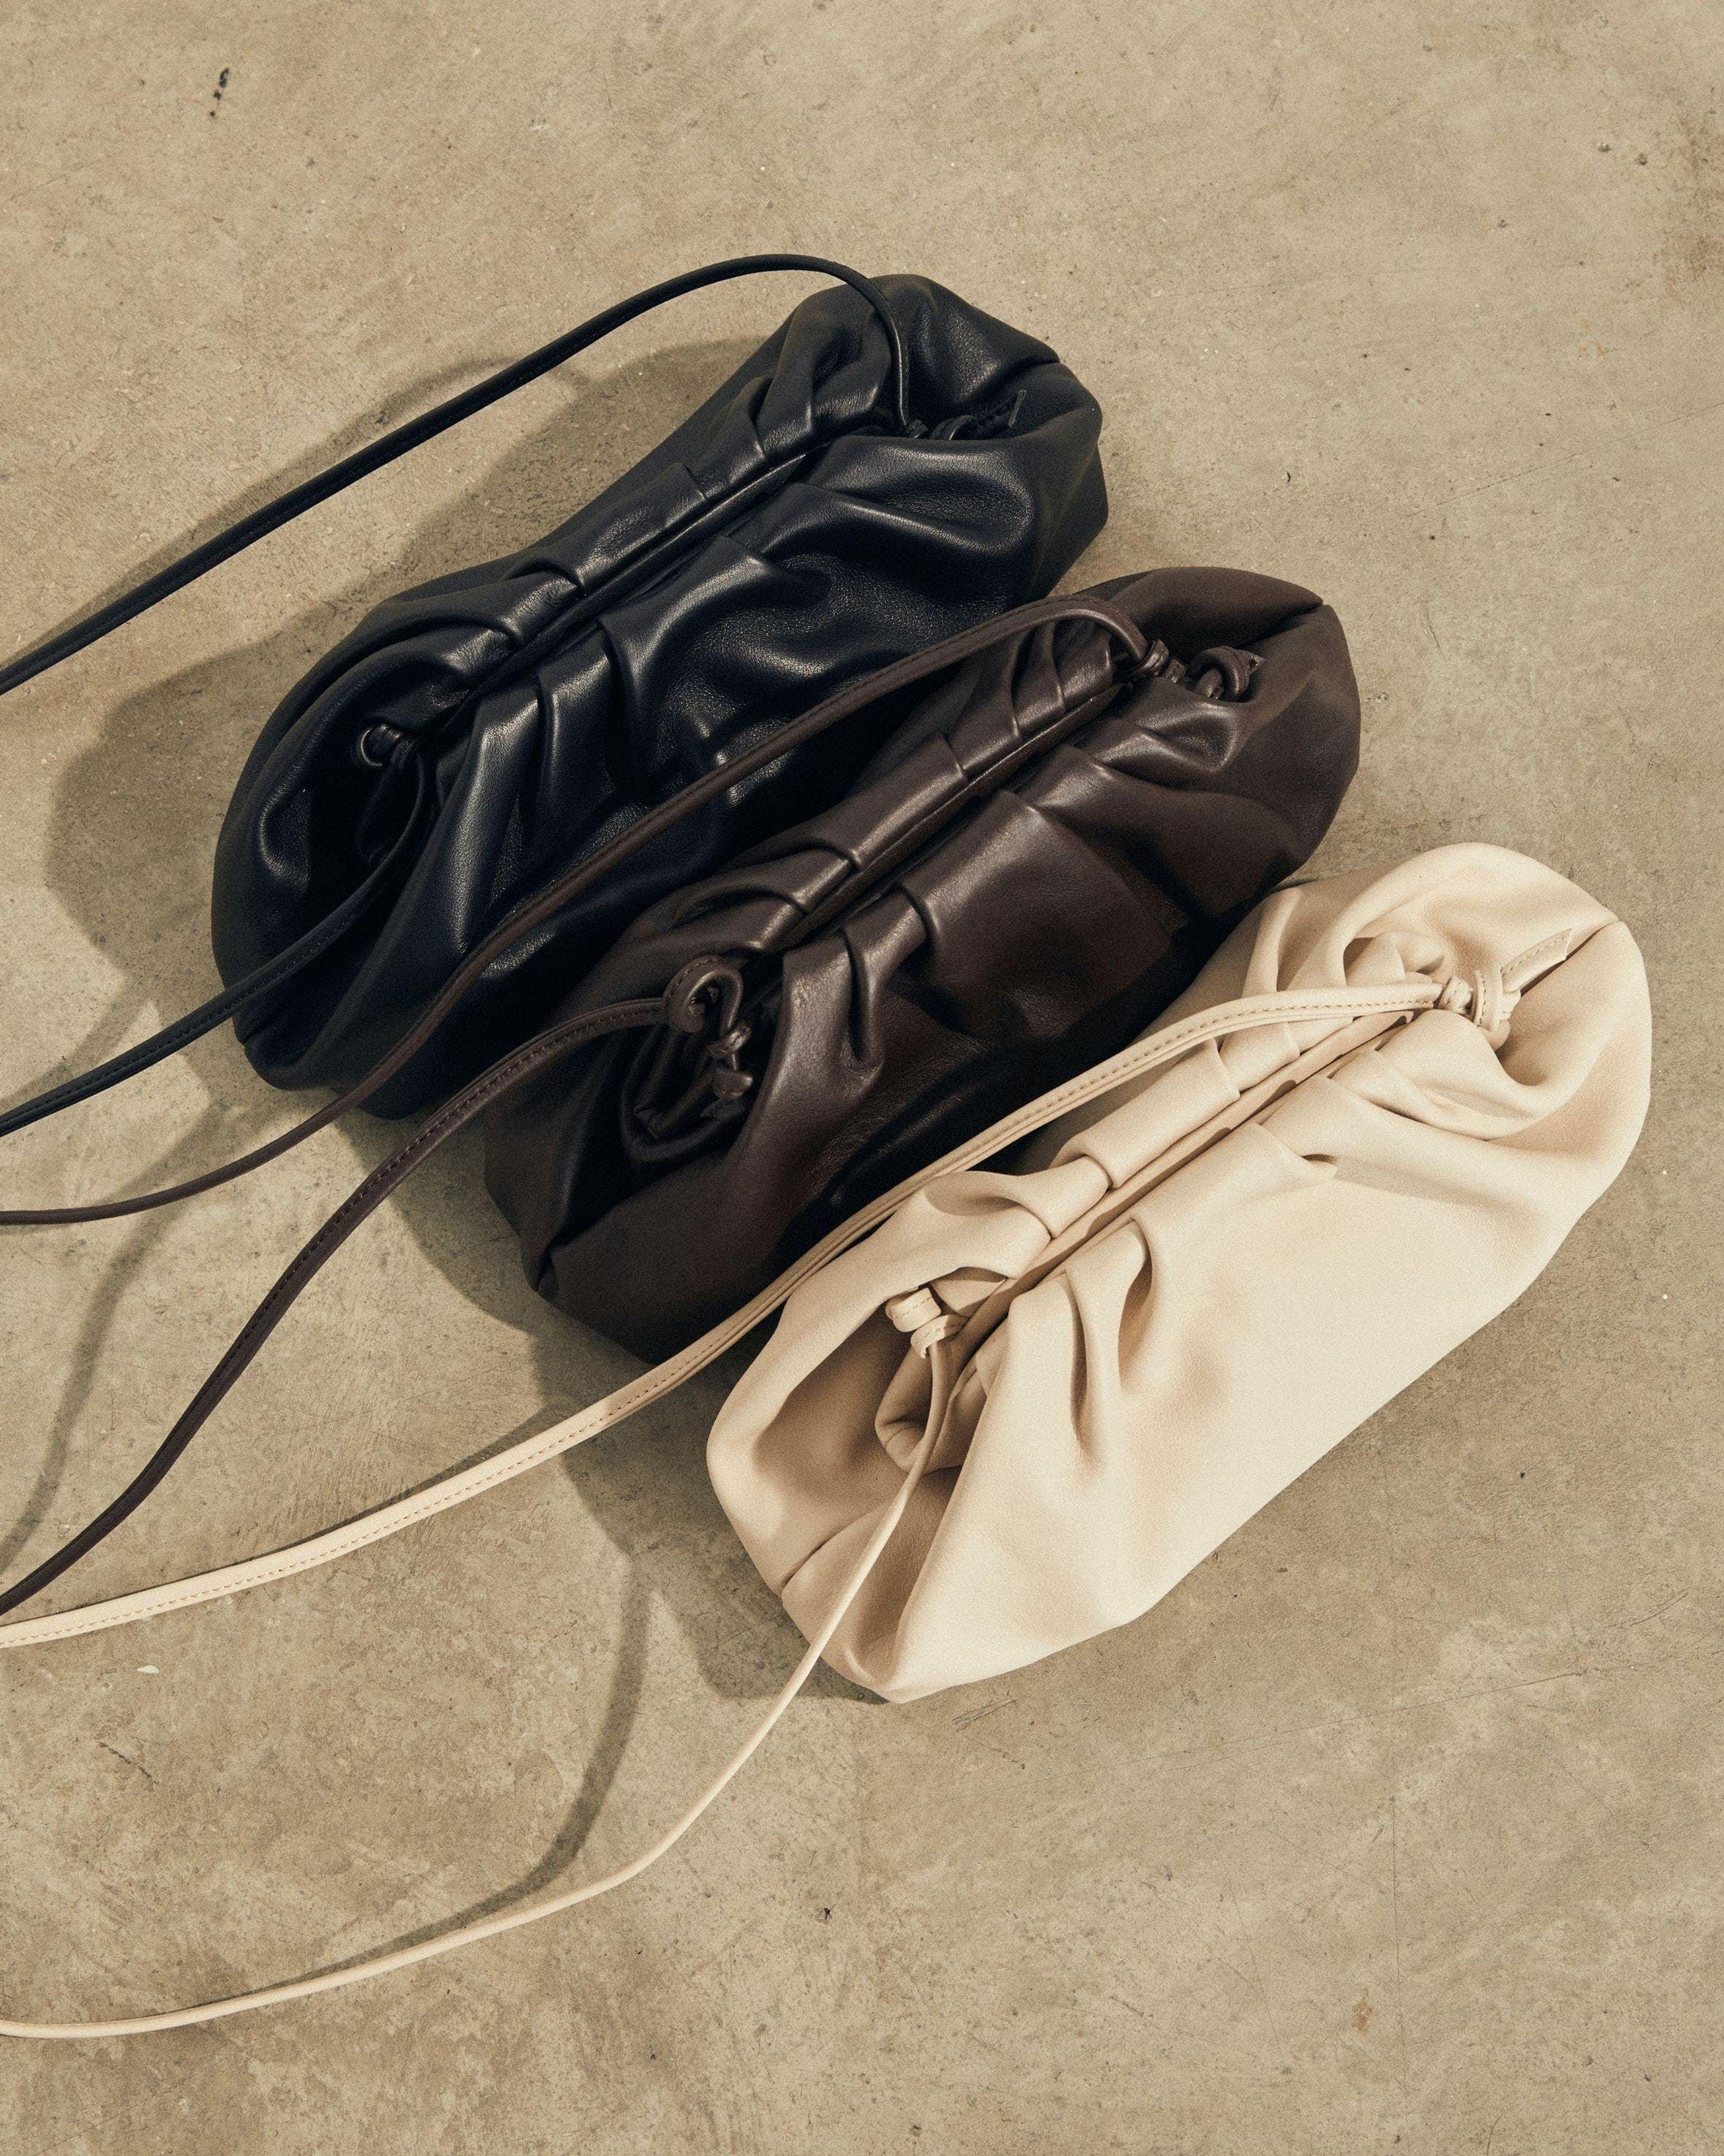 The C Scacchi - Black and White leather Handbag